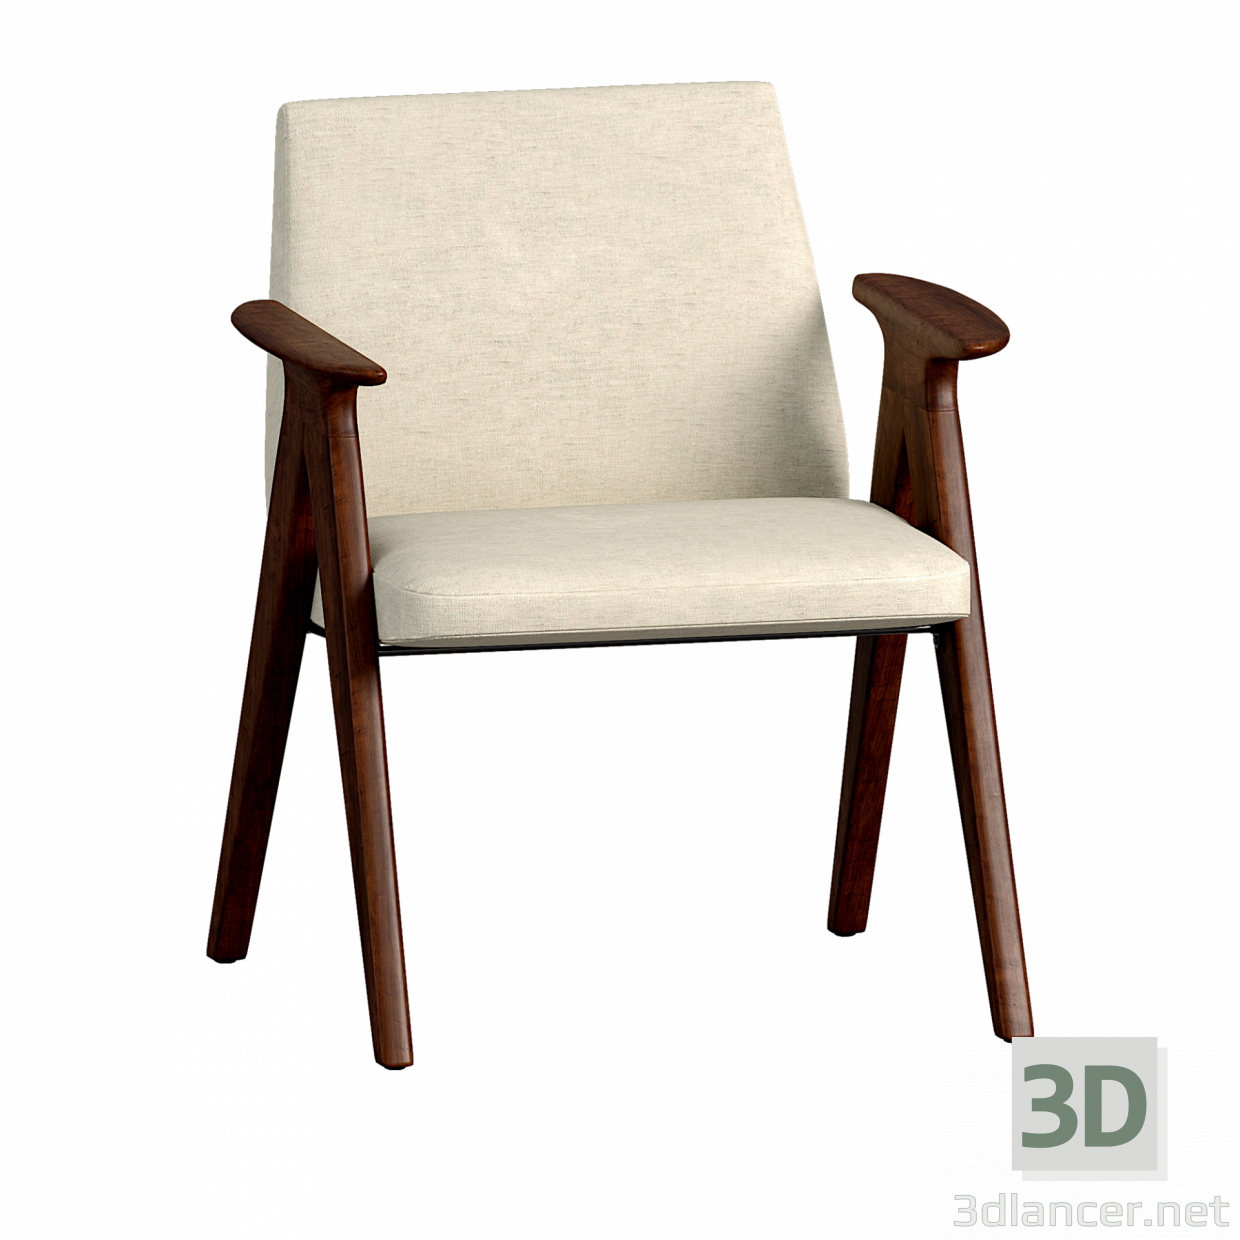 Libera-Sessel 3D-Modell kaufen - Rendern